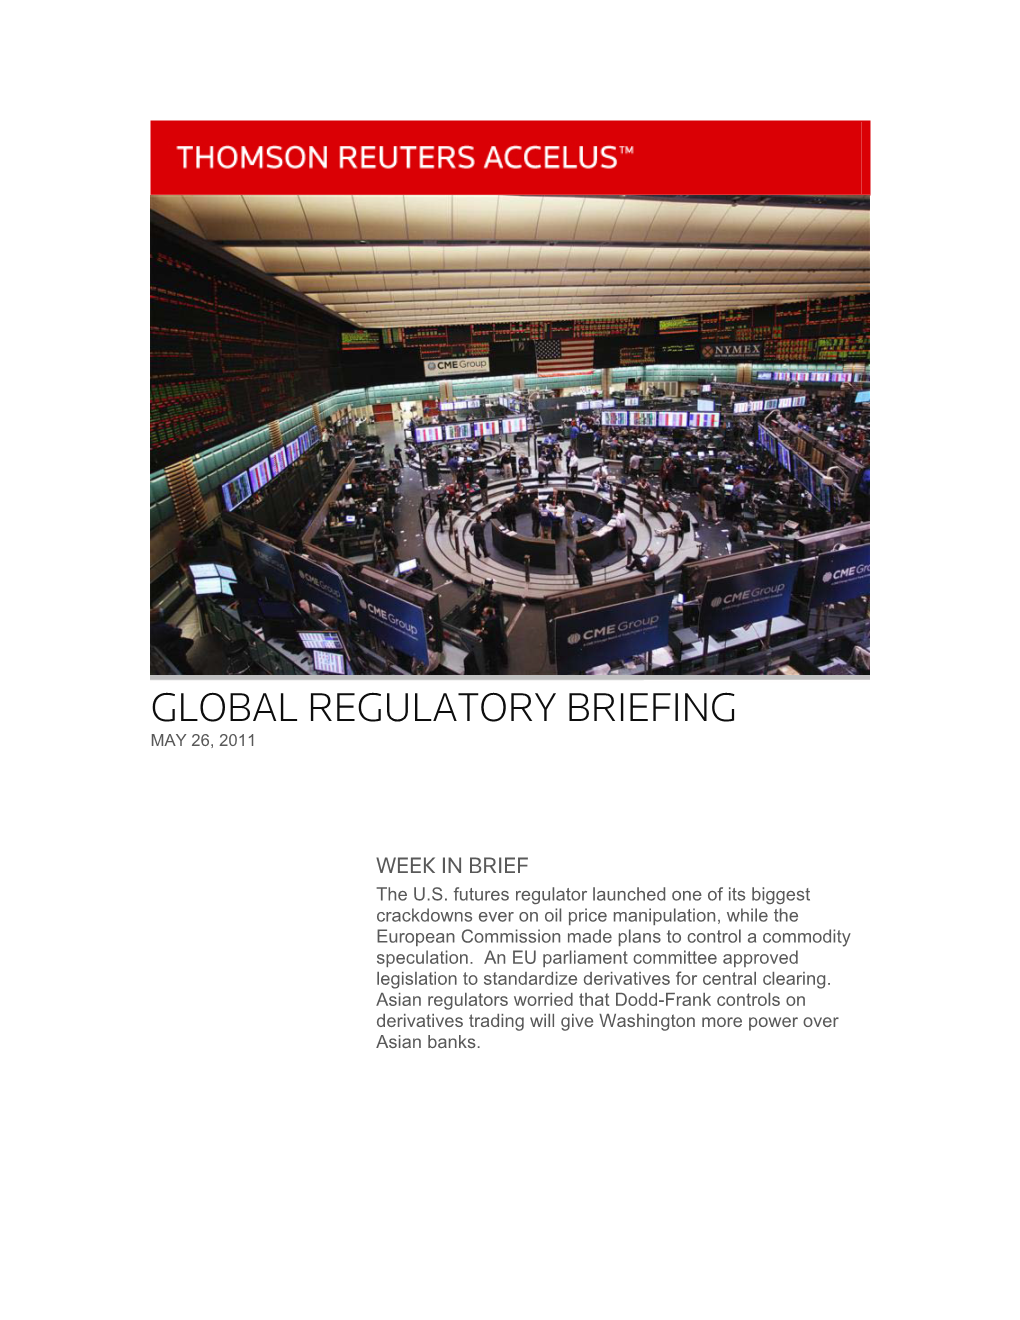 Global Regulatory Briefing May 26, 2011